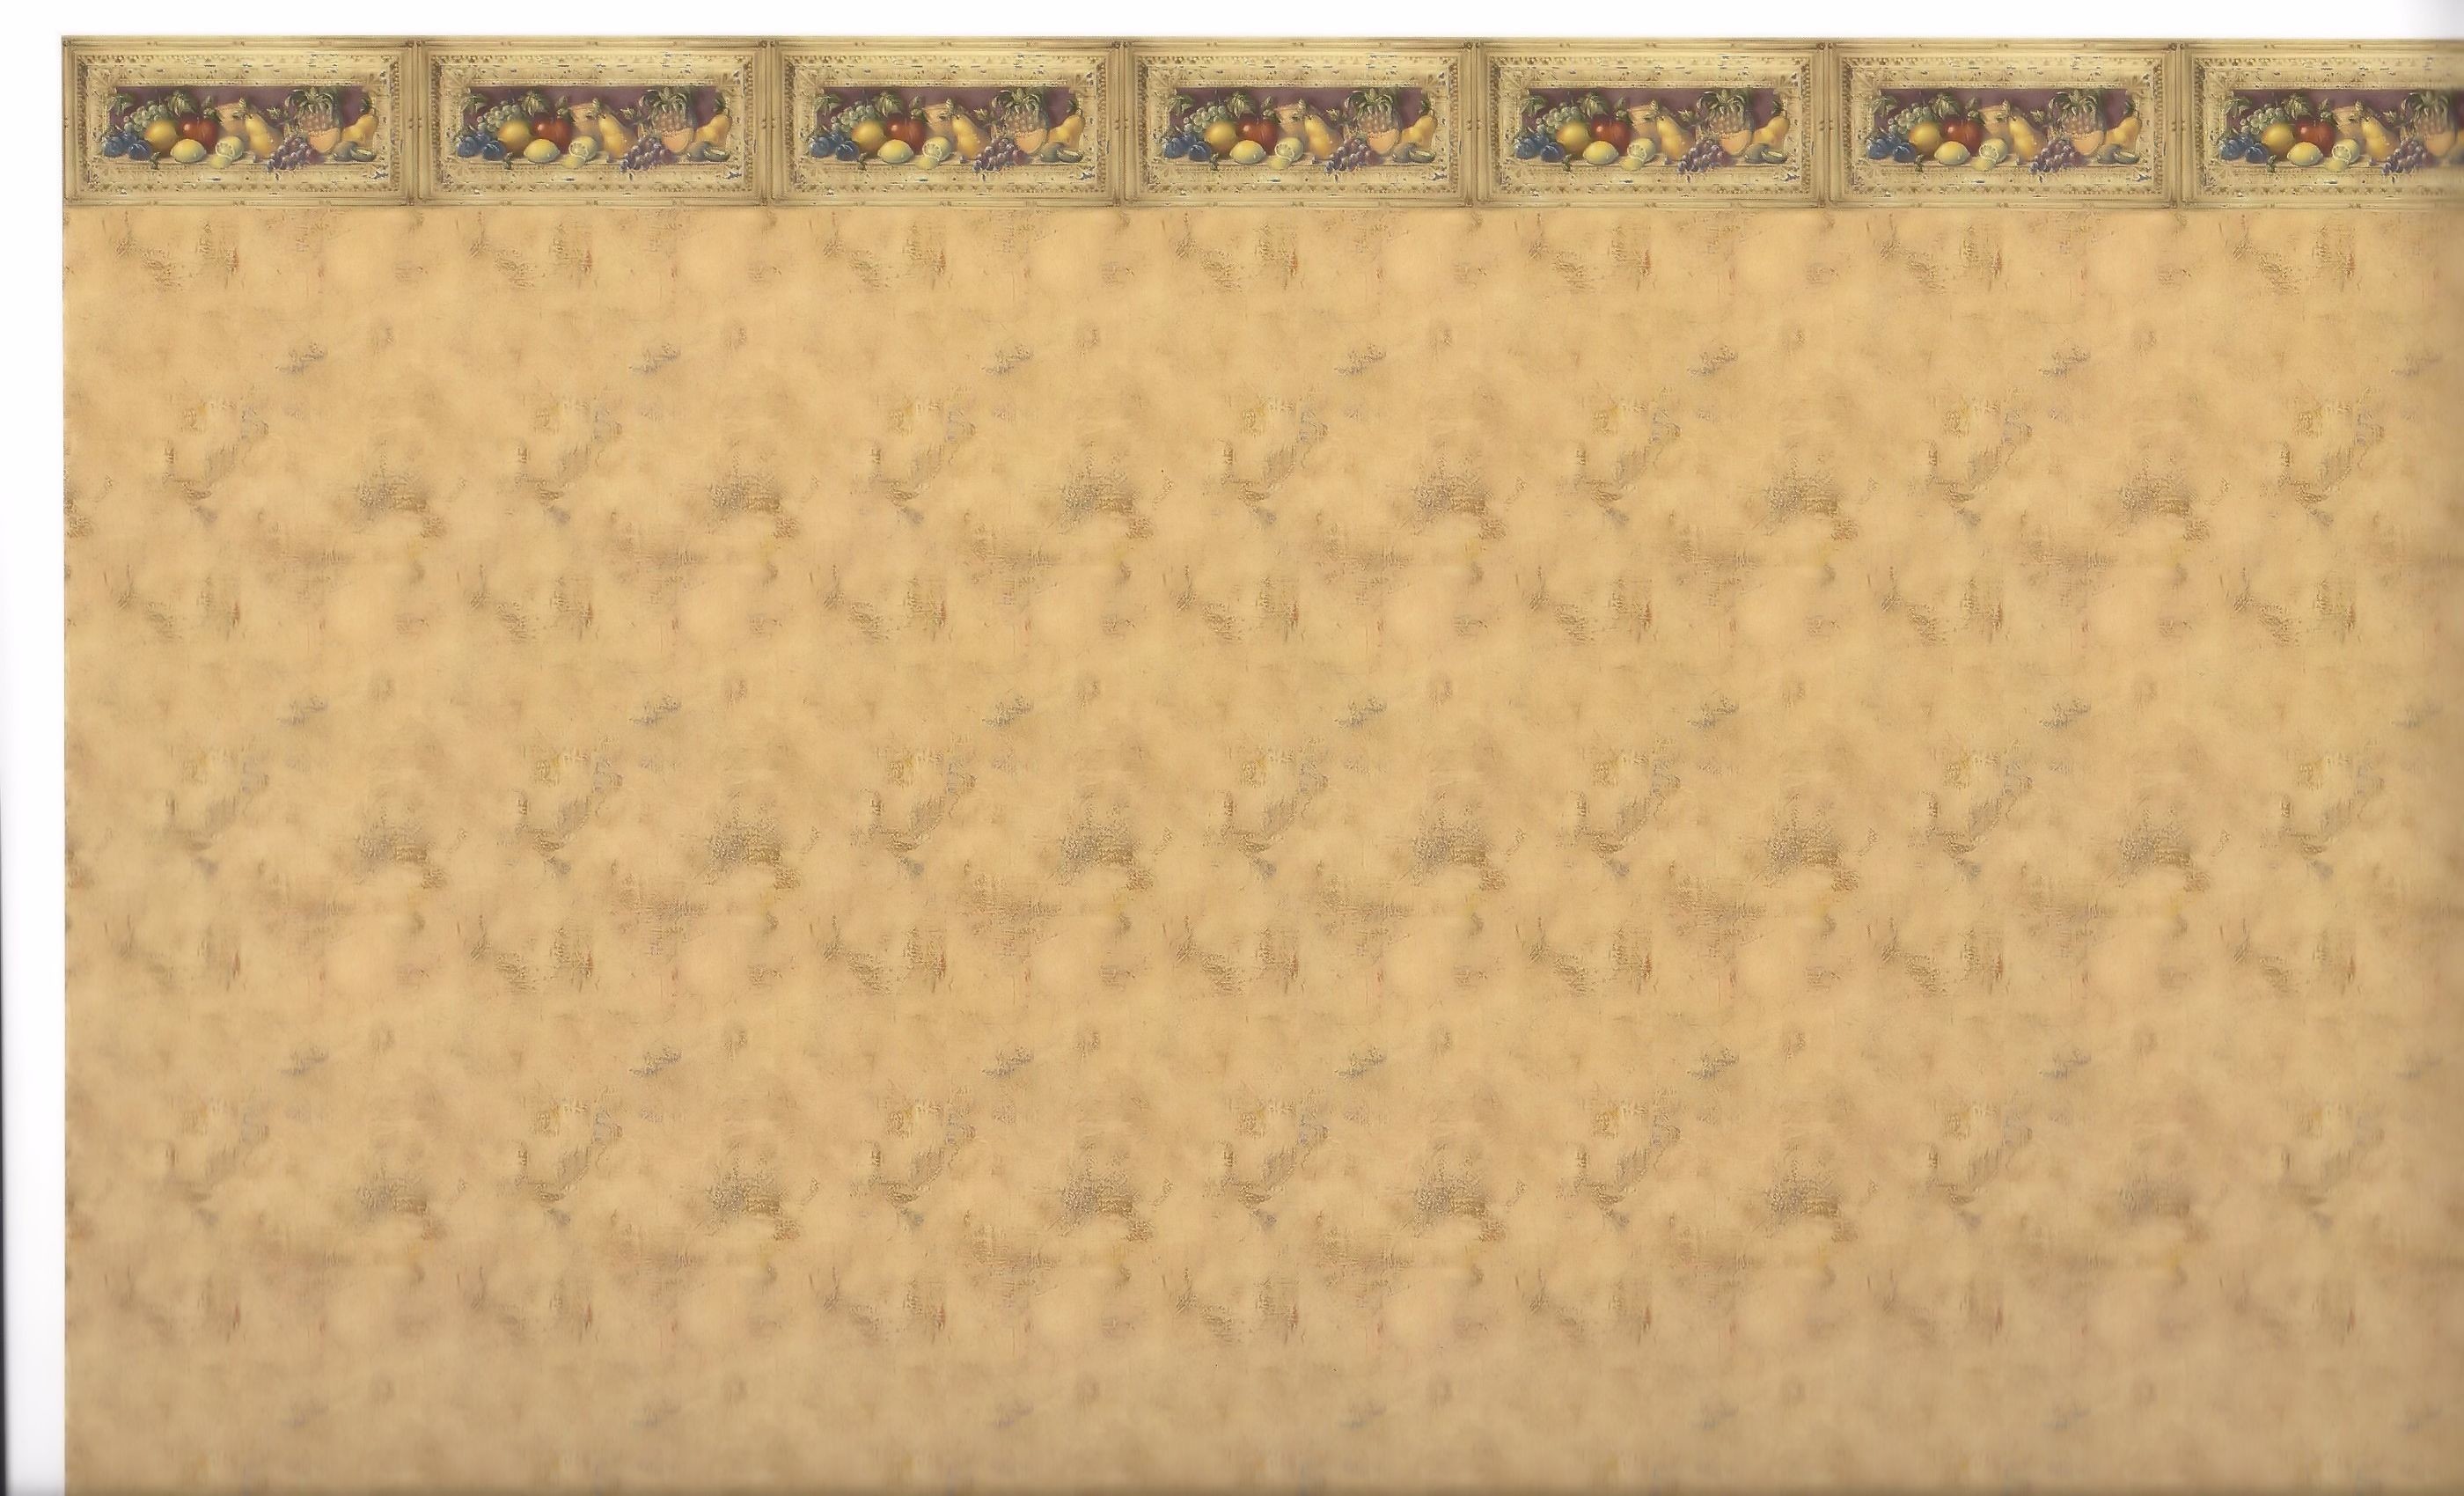 2800x1700 dollhouse wallpaper with fruit border [583a] - $4.00 : manhattan